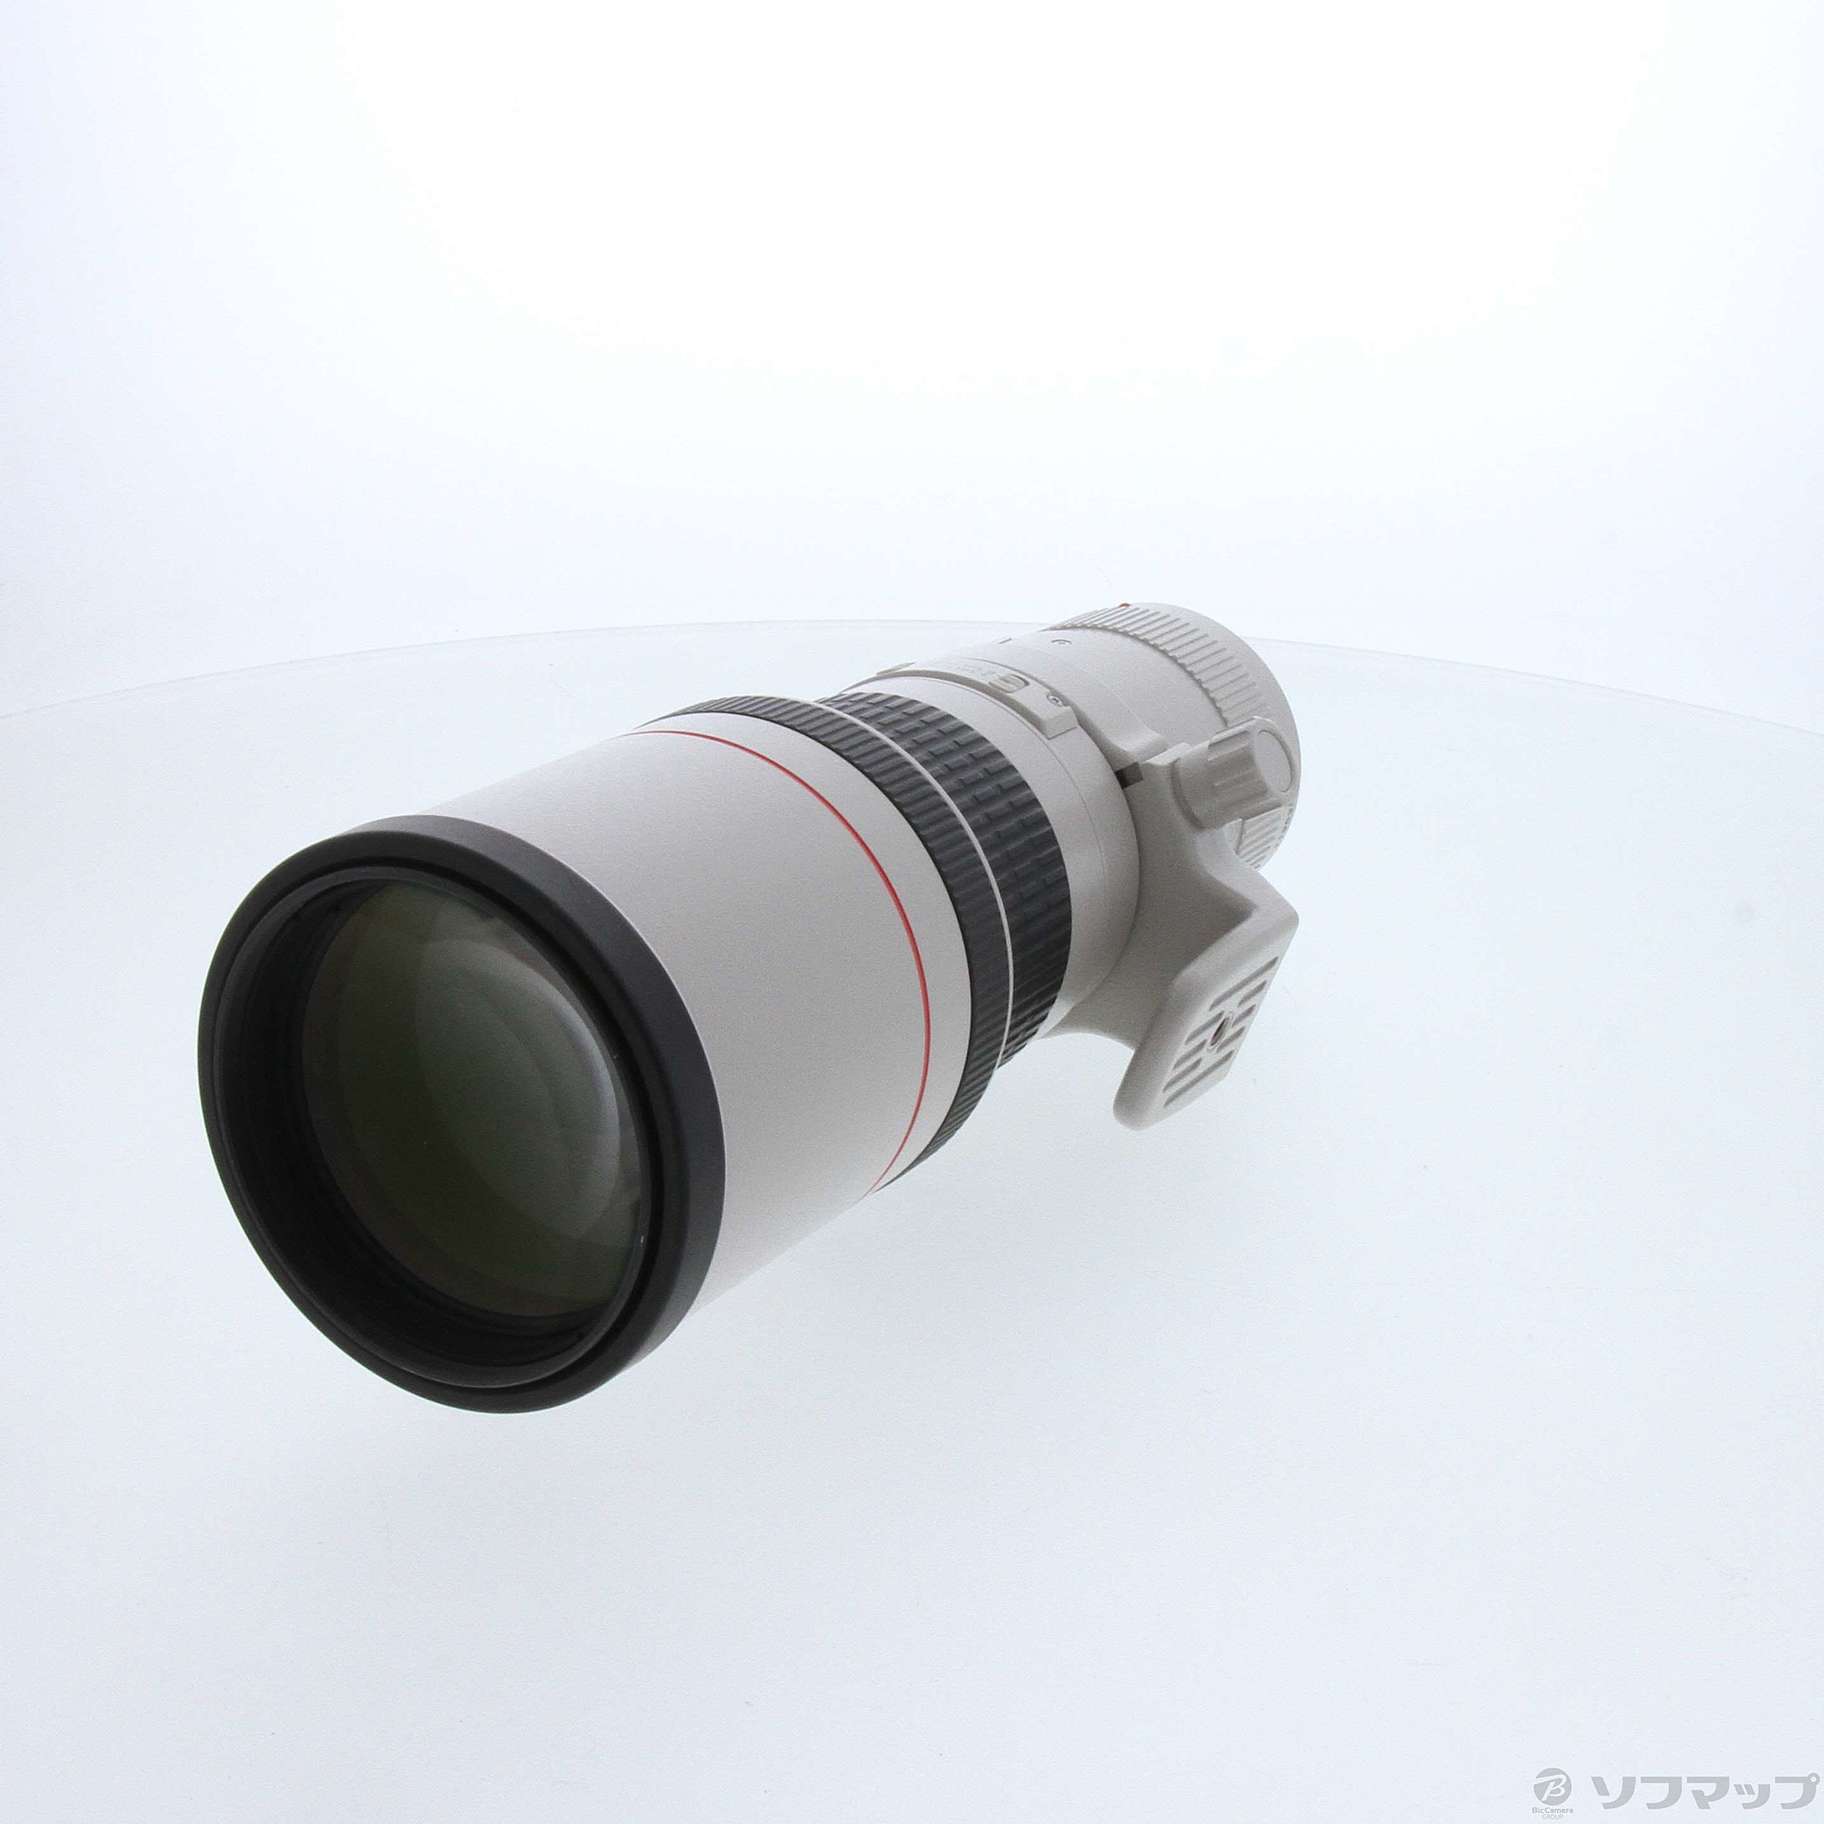 中古】Canon EF 400mm F5.6L USM [2133052405566] - 法人専用